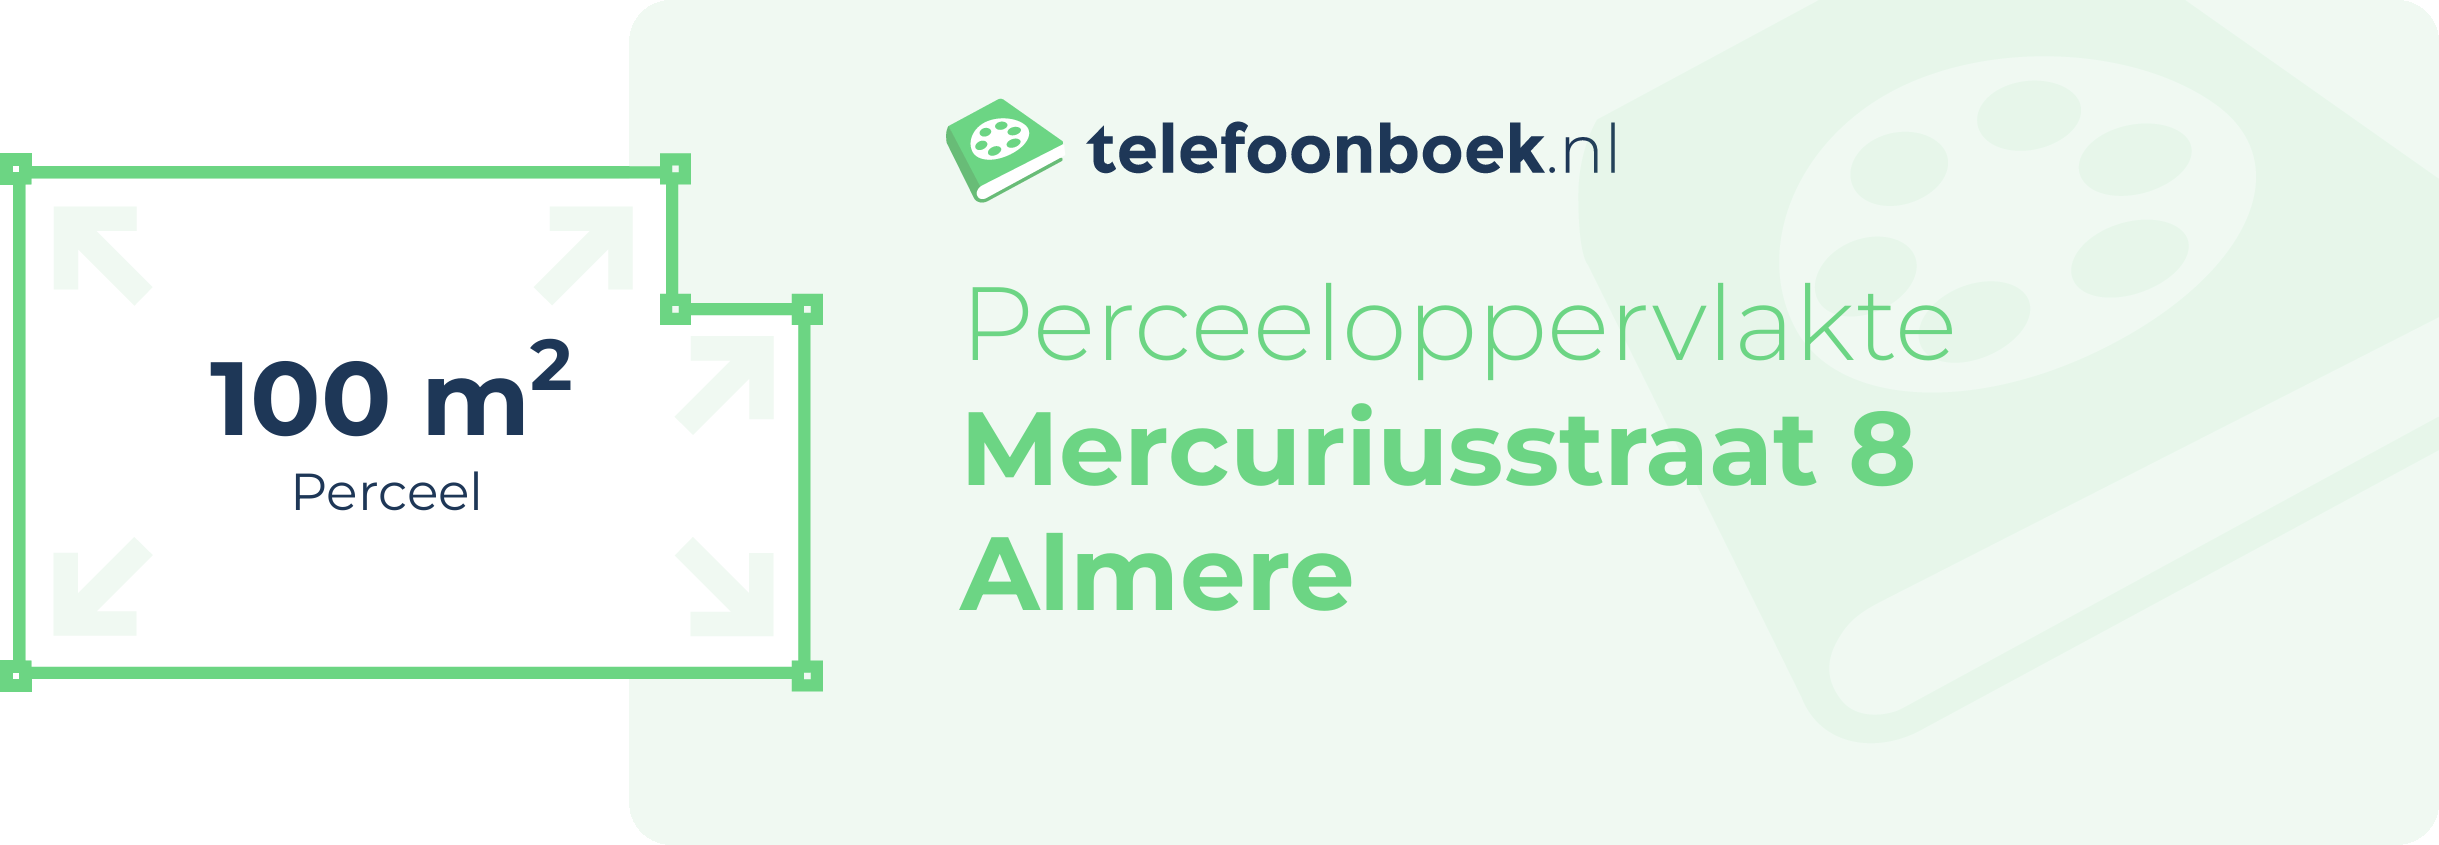 Perceeloppervlakte Mercuriusstraat 8 Almere